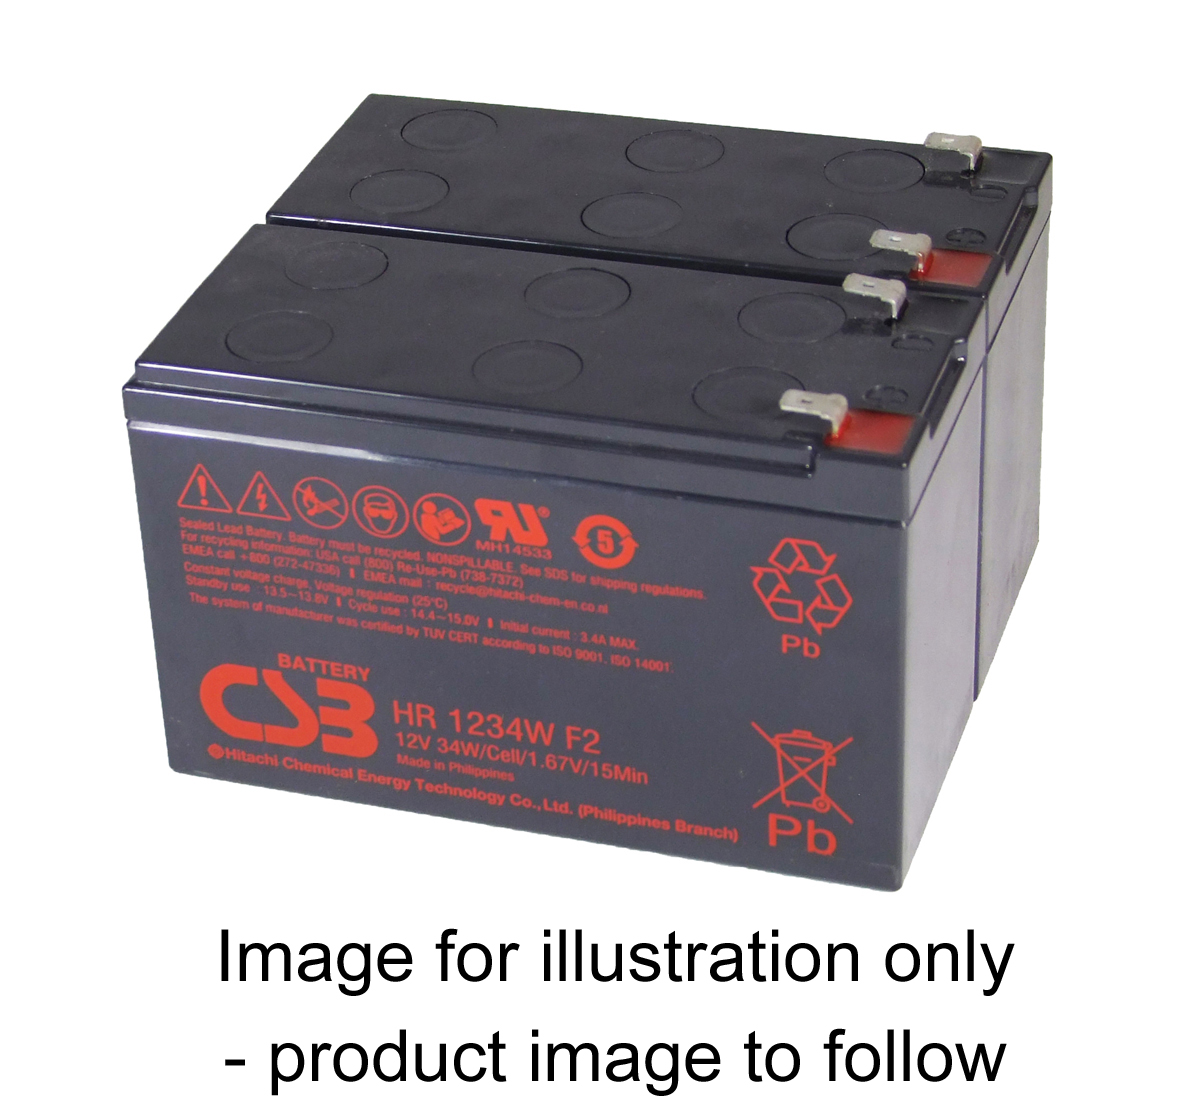 MDSV206 UPS Battery Kit - Replaces APC RBCV206